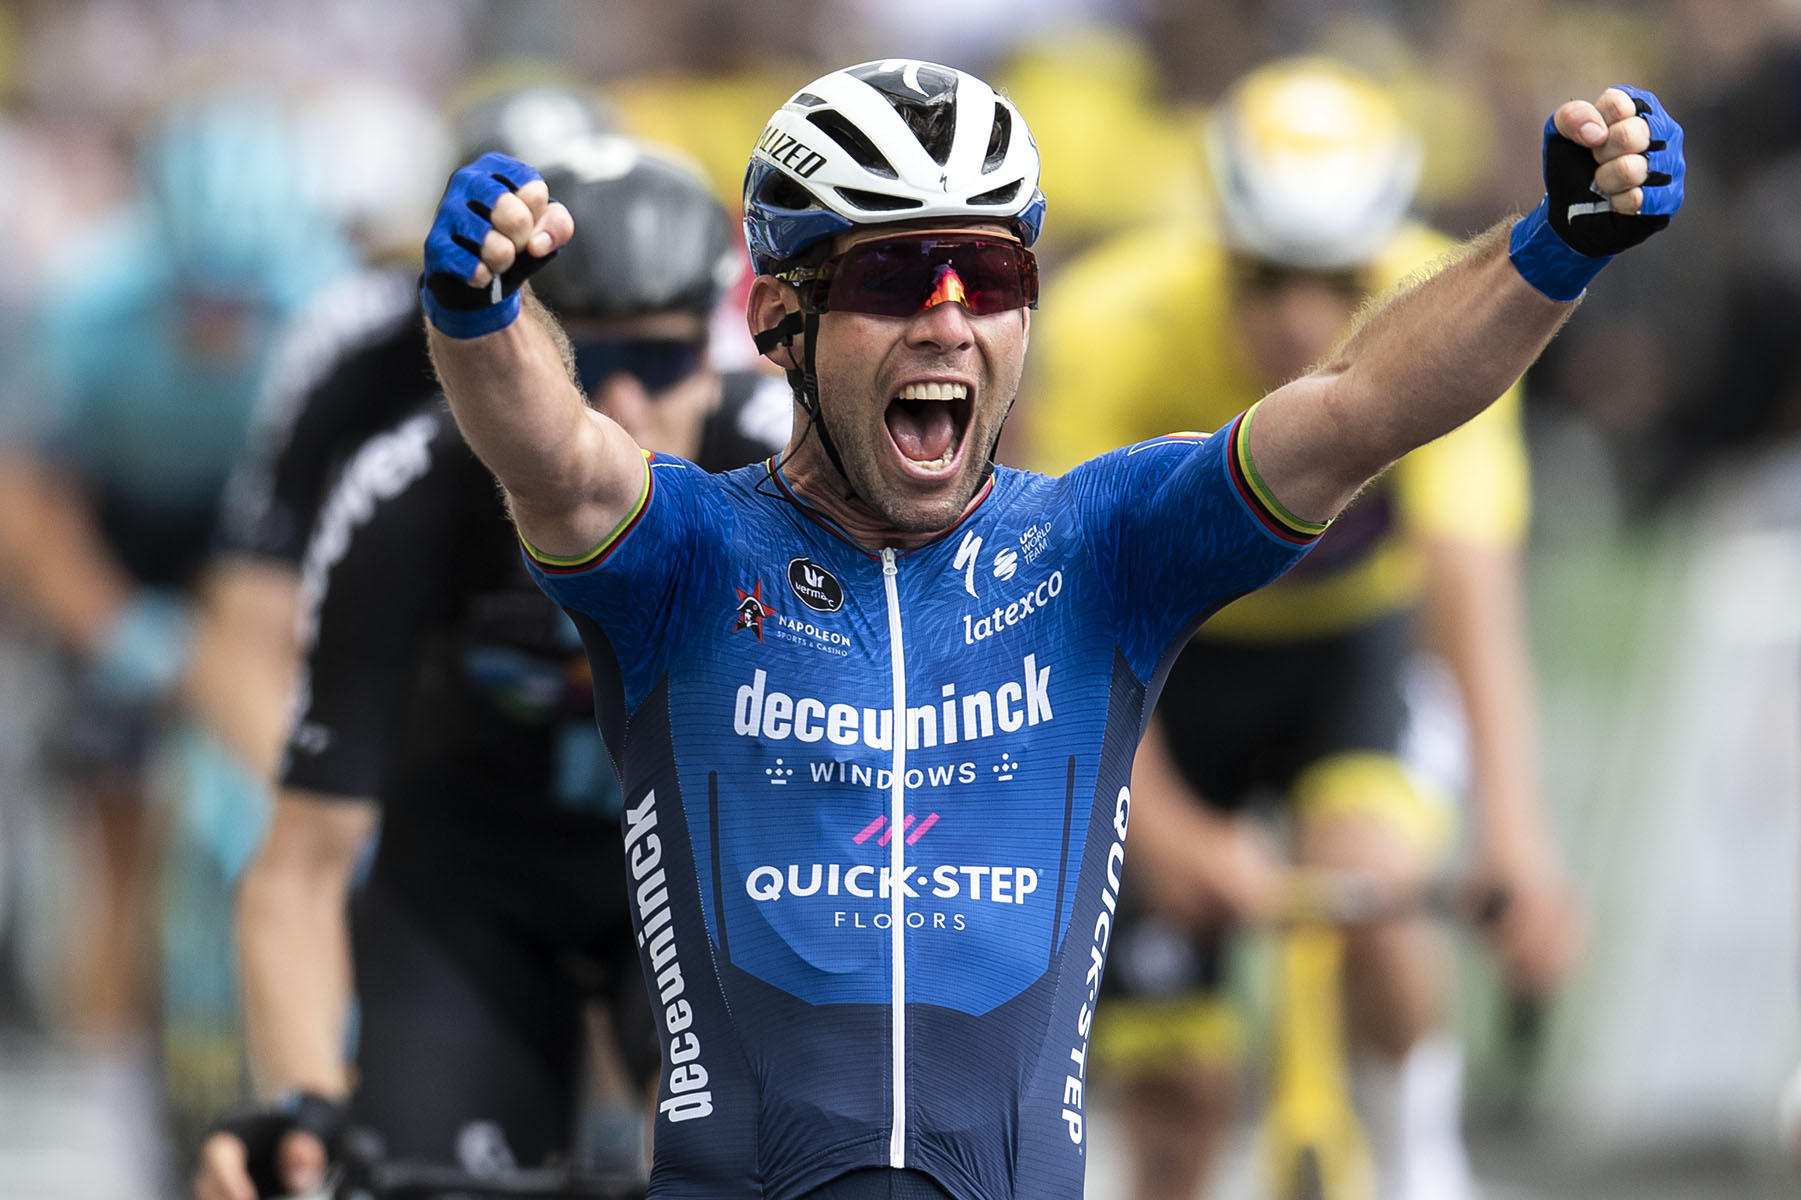 Tour de France 2021 - Stage Four - Mark Cavendish celebrates winning the stage